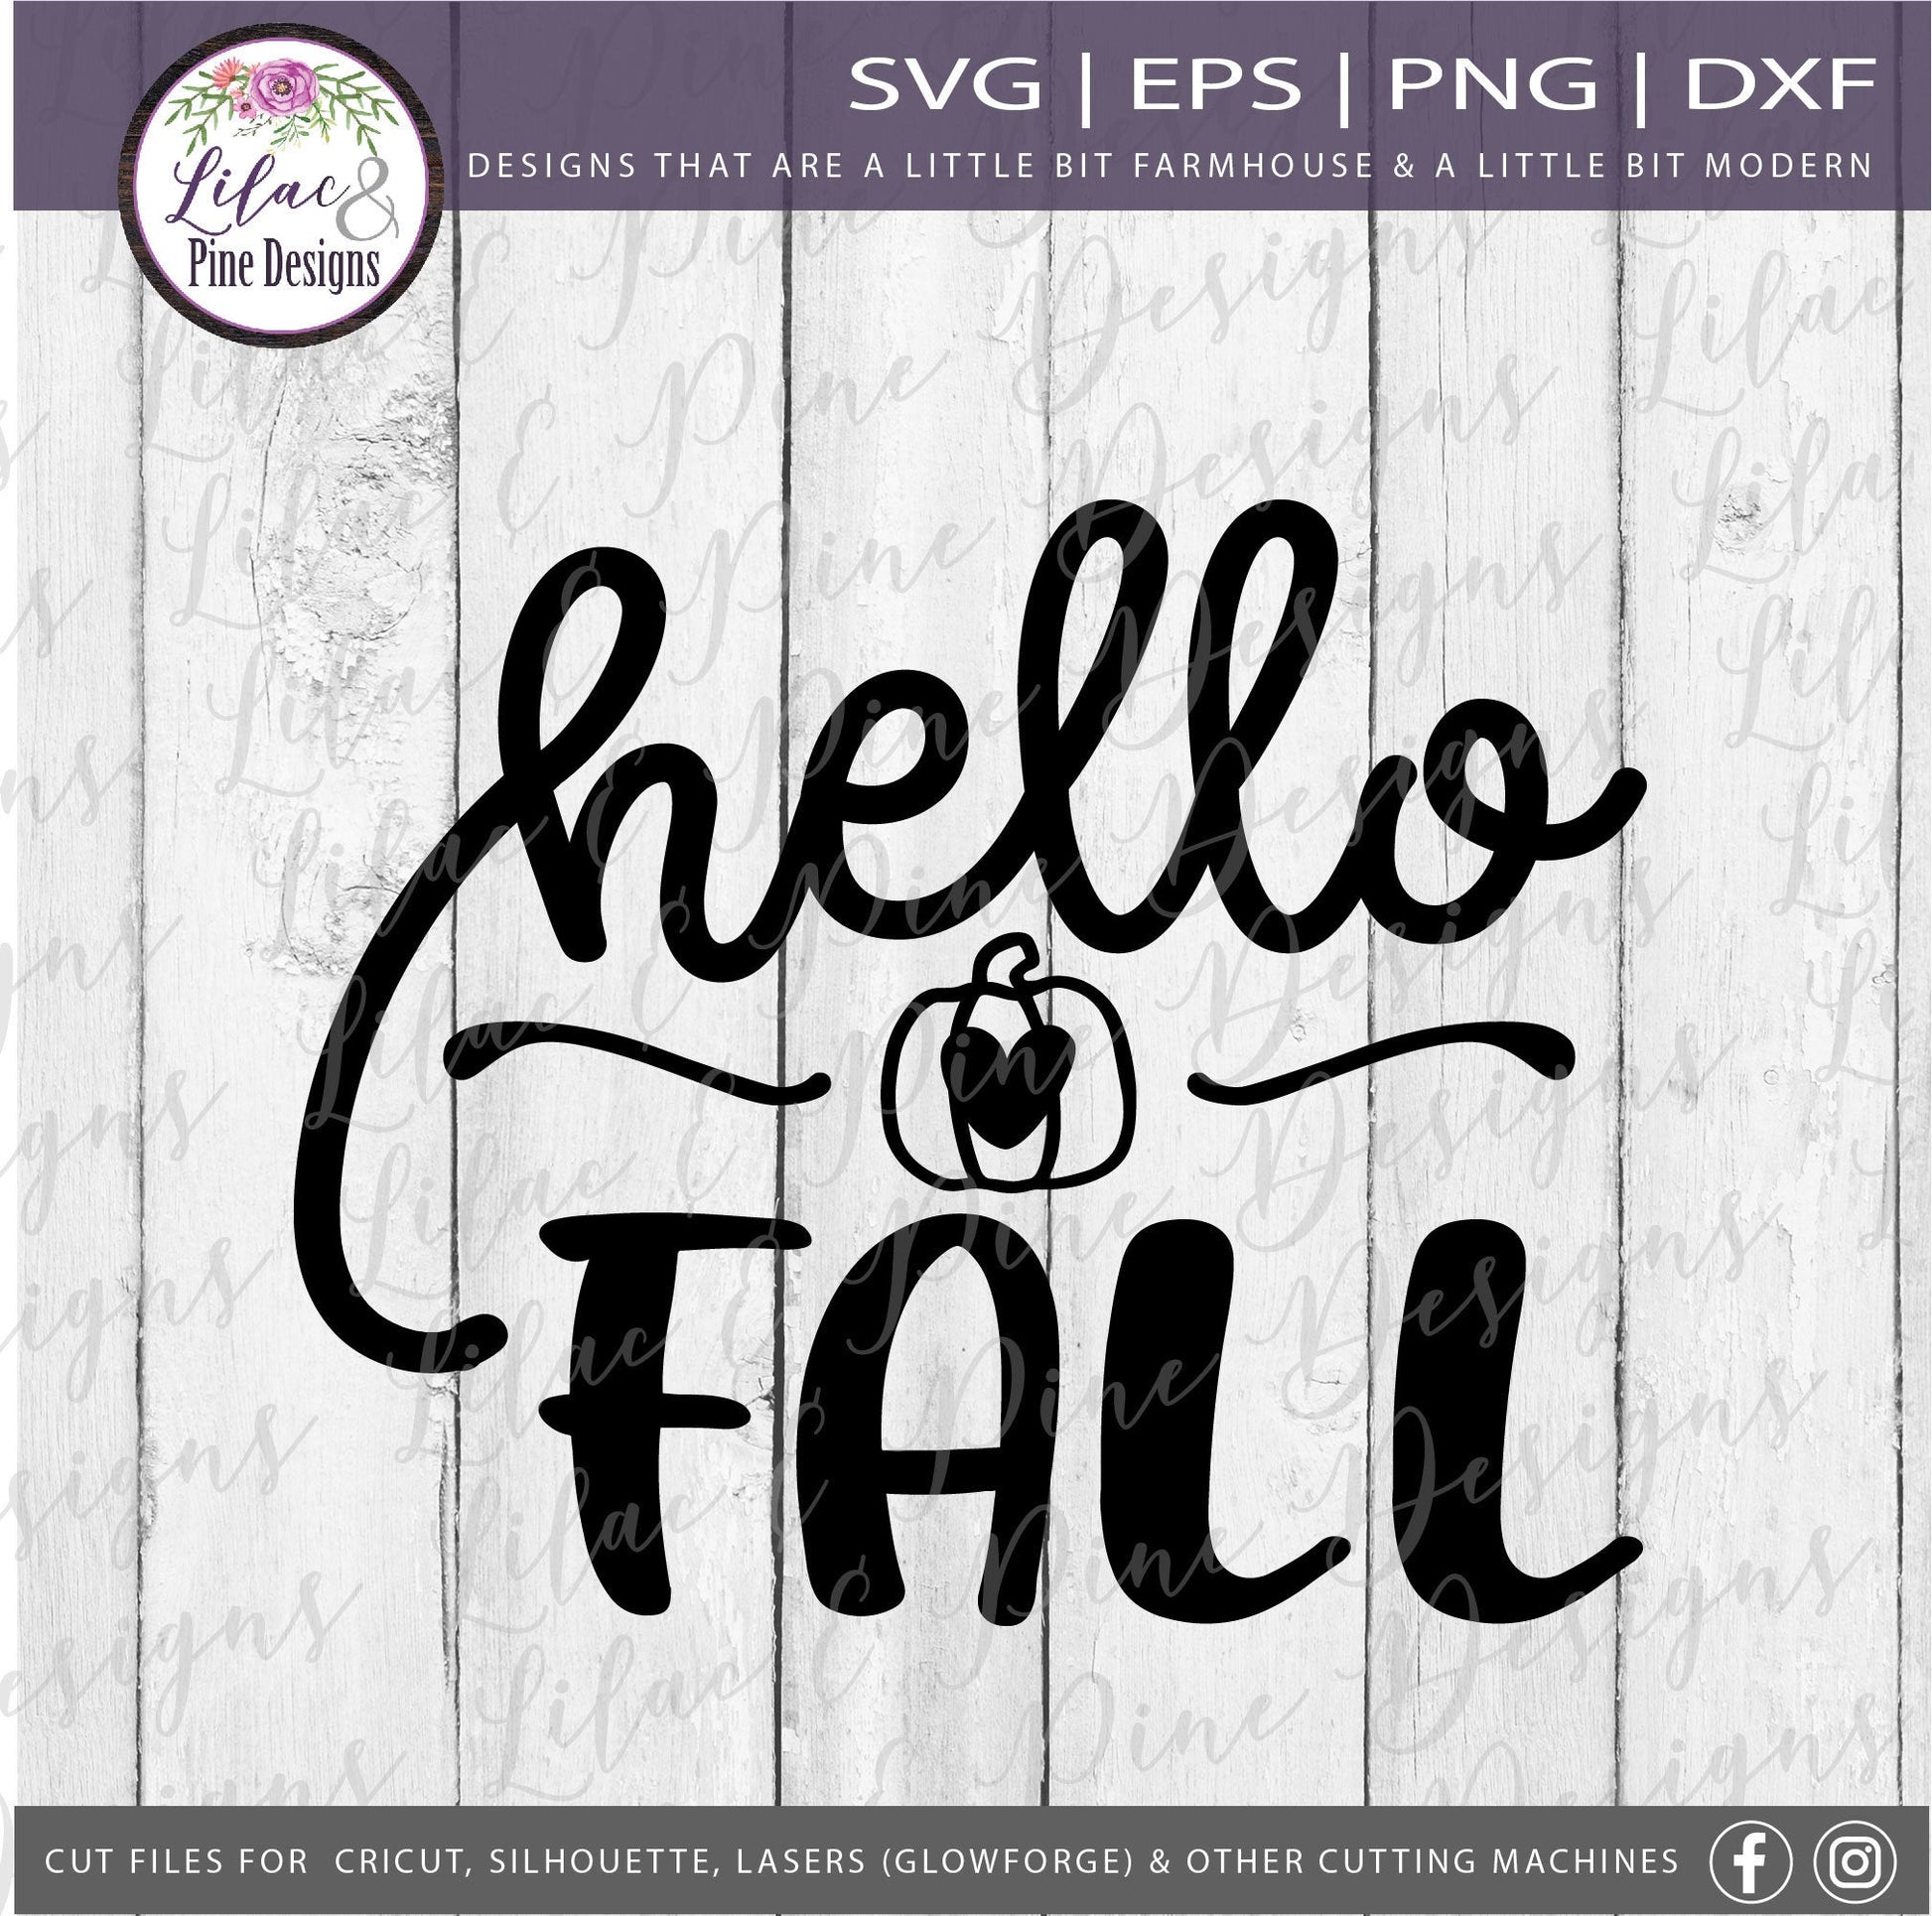 Fall SVG, Hello fall SVG, Fall Welcome SVG, Hello fall pumpkin Svg, Modern Farmhouse Svg, Fall decor, tiered tray sign file, Fall shirt Svg